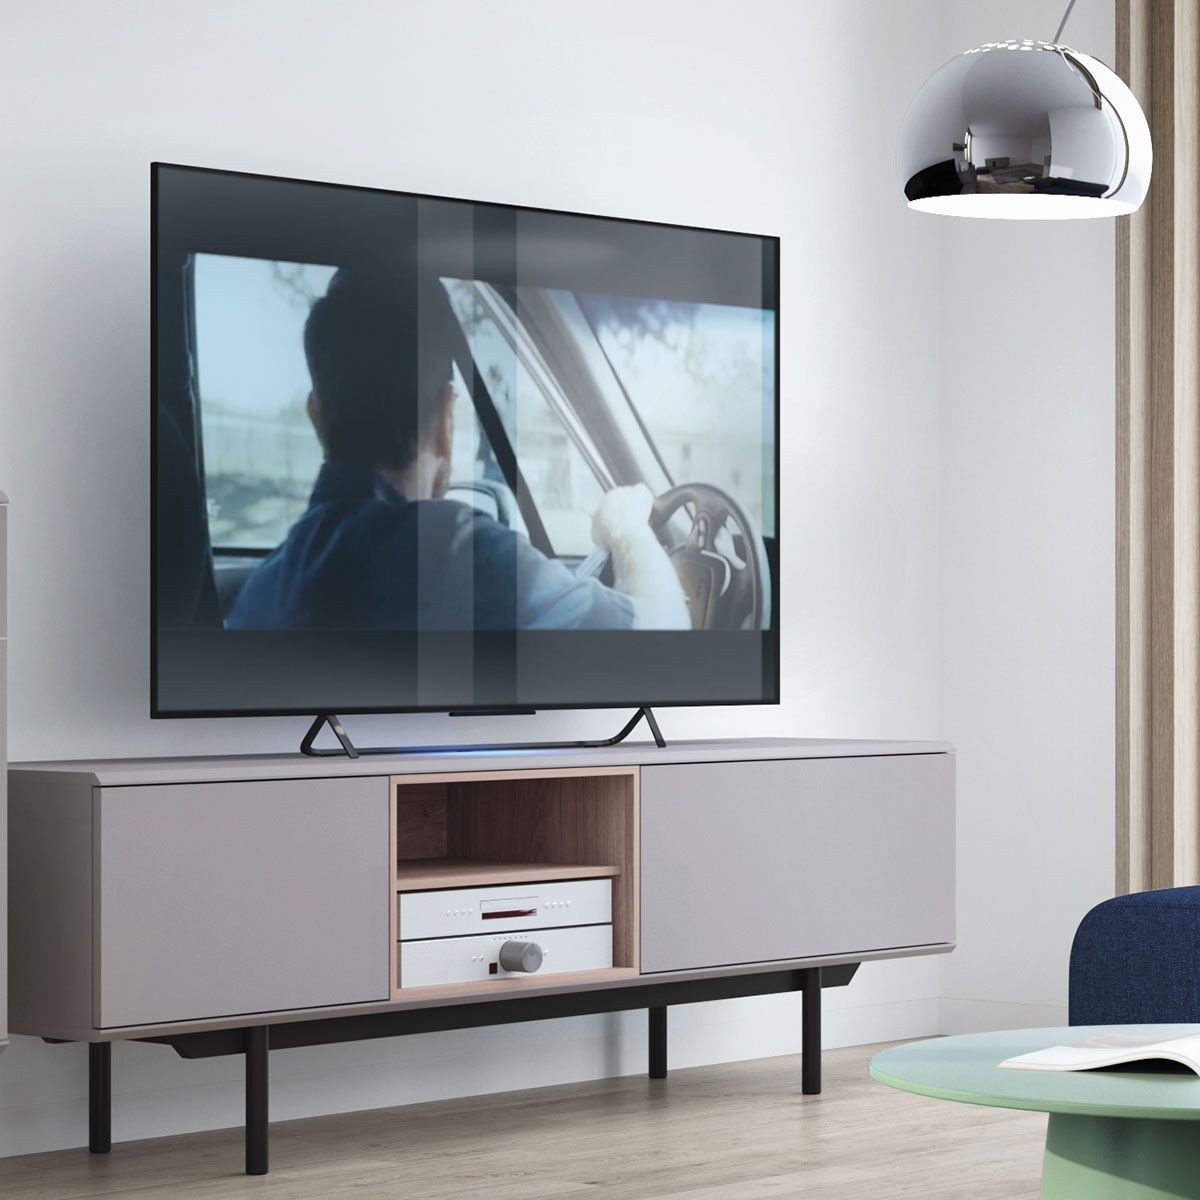 Mueble TV (150) INOX - Mobles Rossi